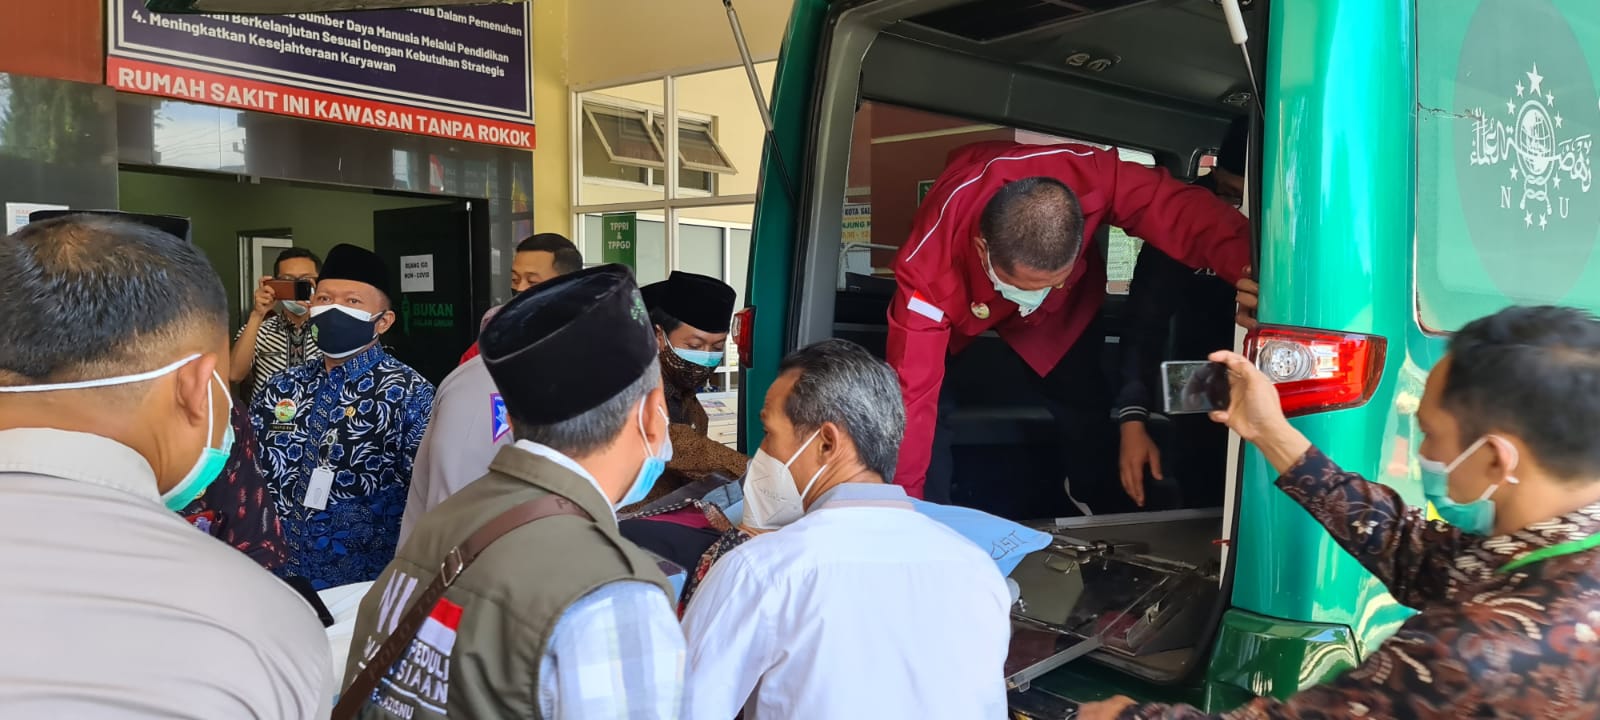 Membaik Usai Kecelakaan di Salatiga, Ketum MUI Lanjutkan Perjalanan ke Surabaya